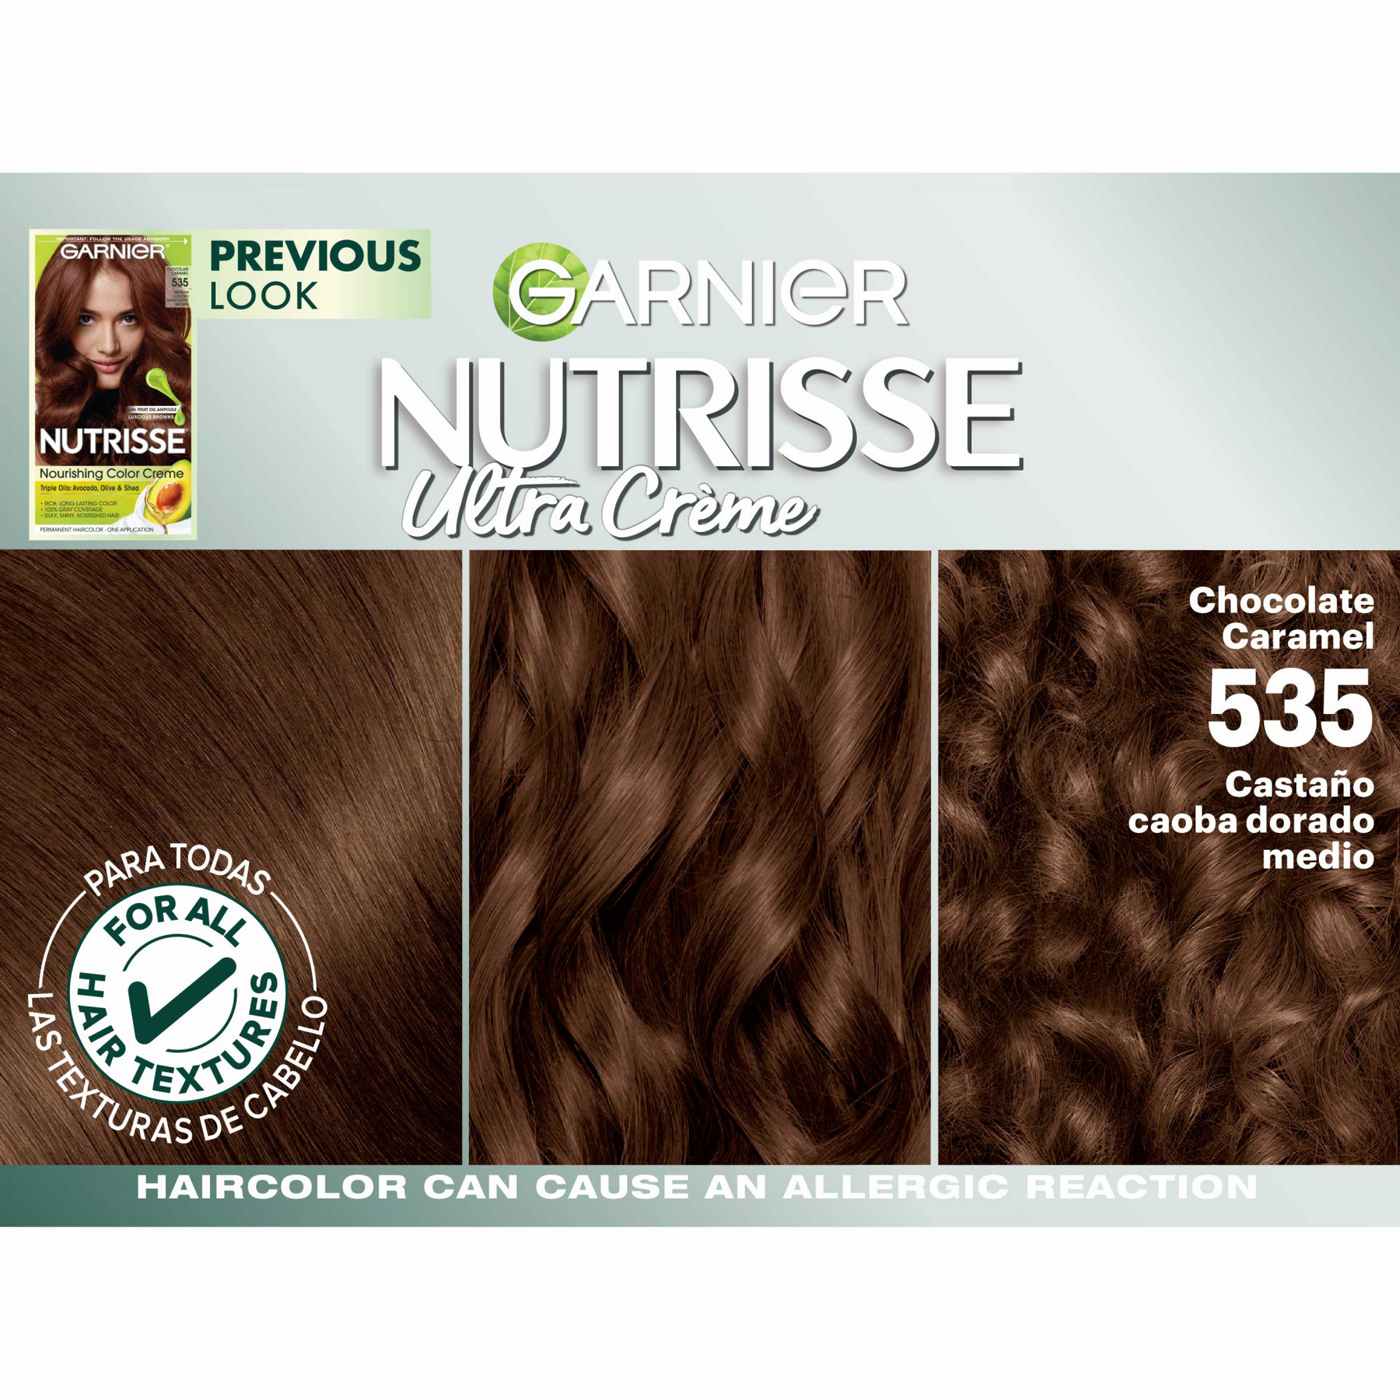 Garnier Nutrisse Nourishing Hair Color Creme 535 Med Gold Mahogany Brown  (Chocolate Caramel) - Shop Hair Color at H-E-B